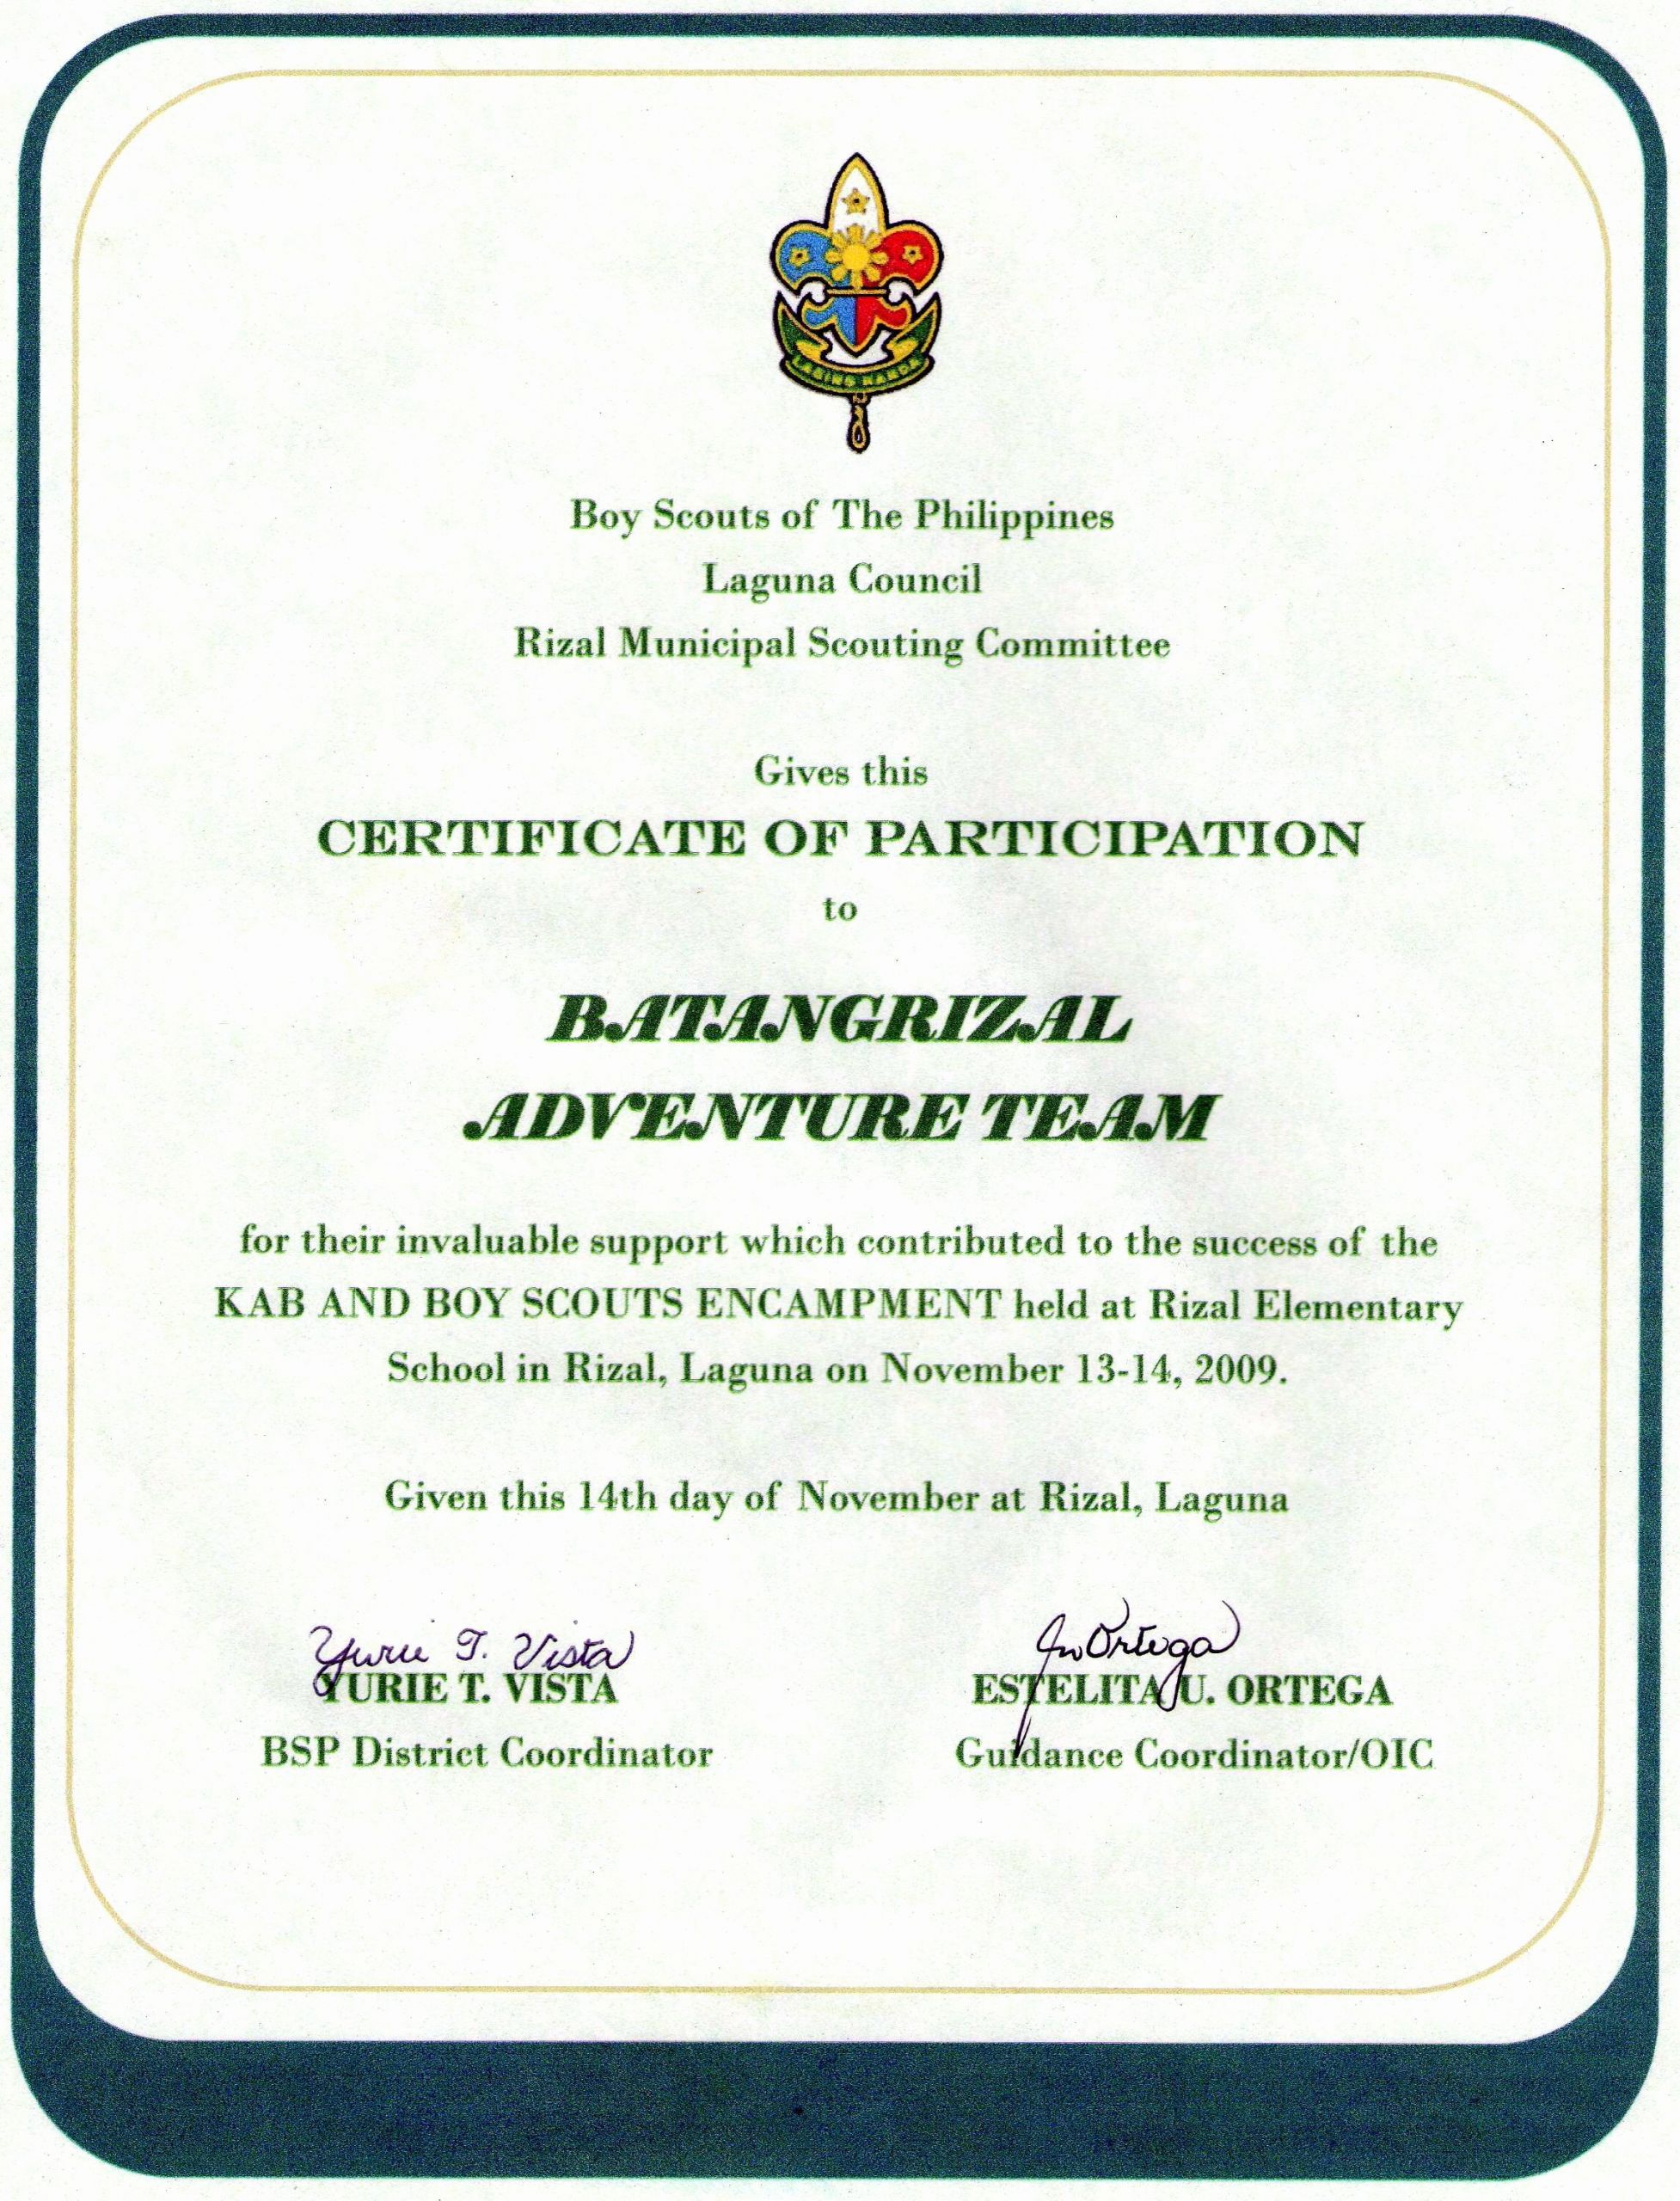 Boy Scout Certificate Template Best Of Certificate Appreciation Template Boy Scouts